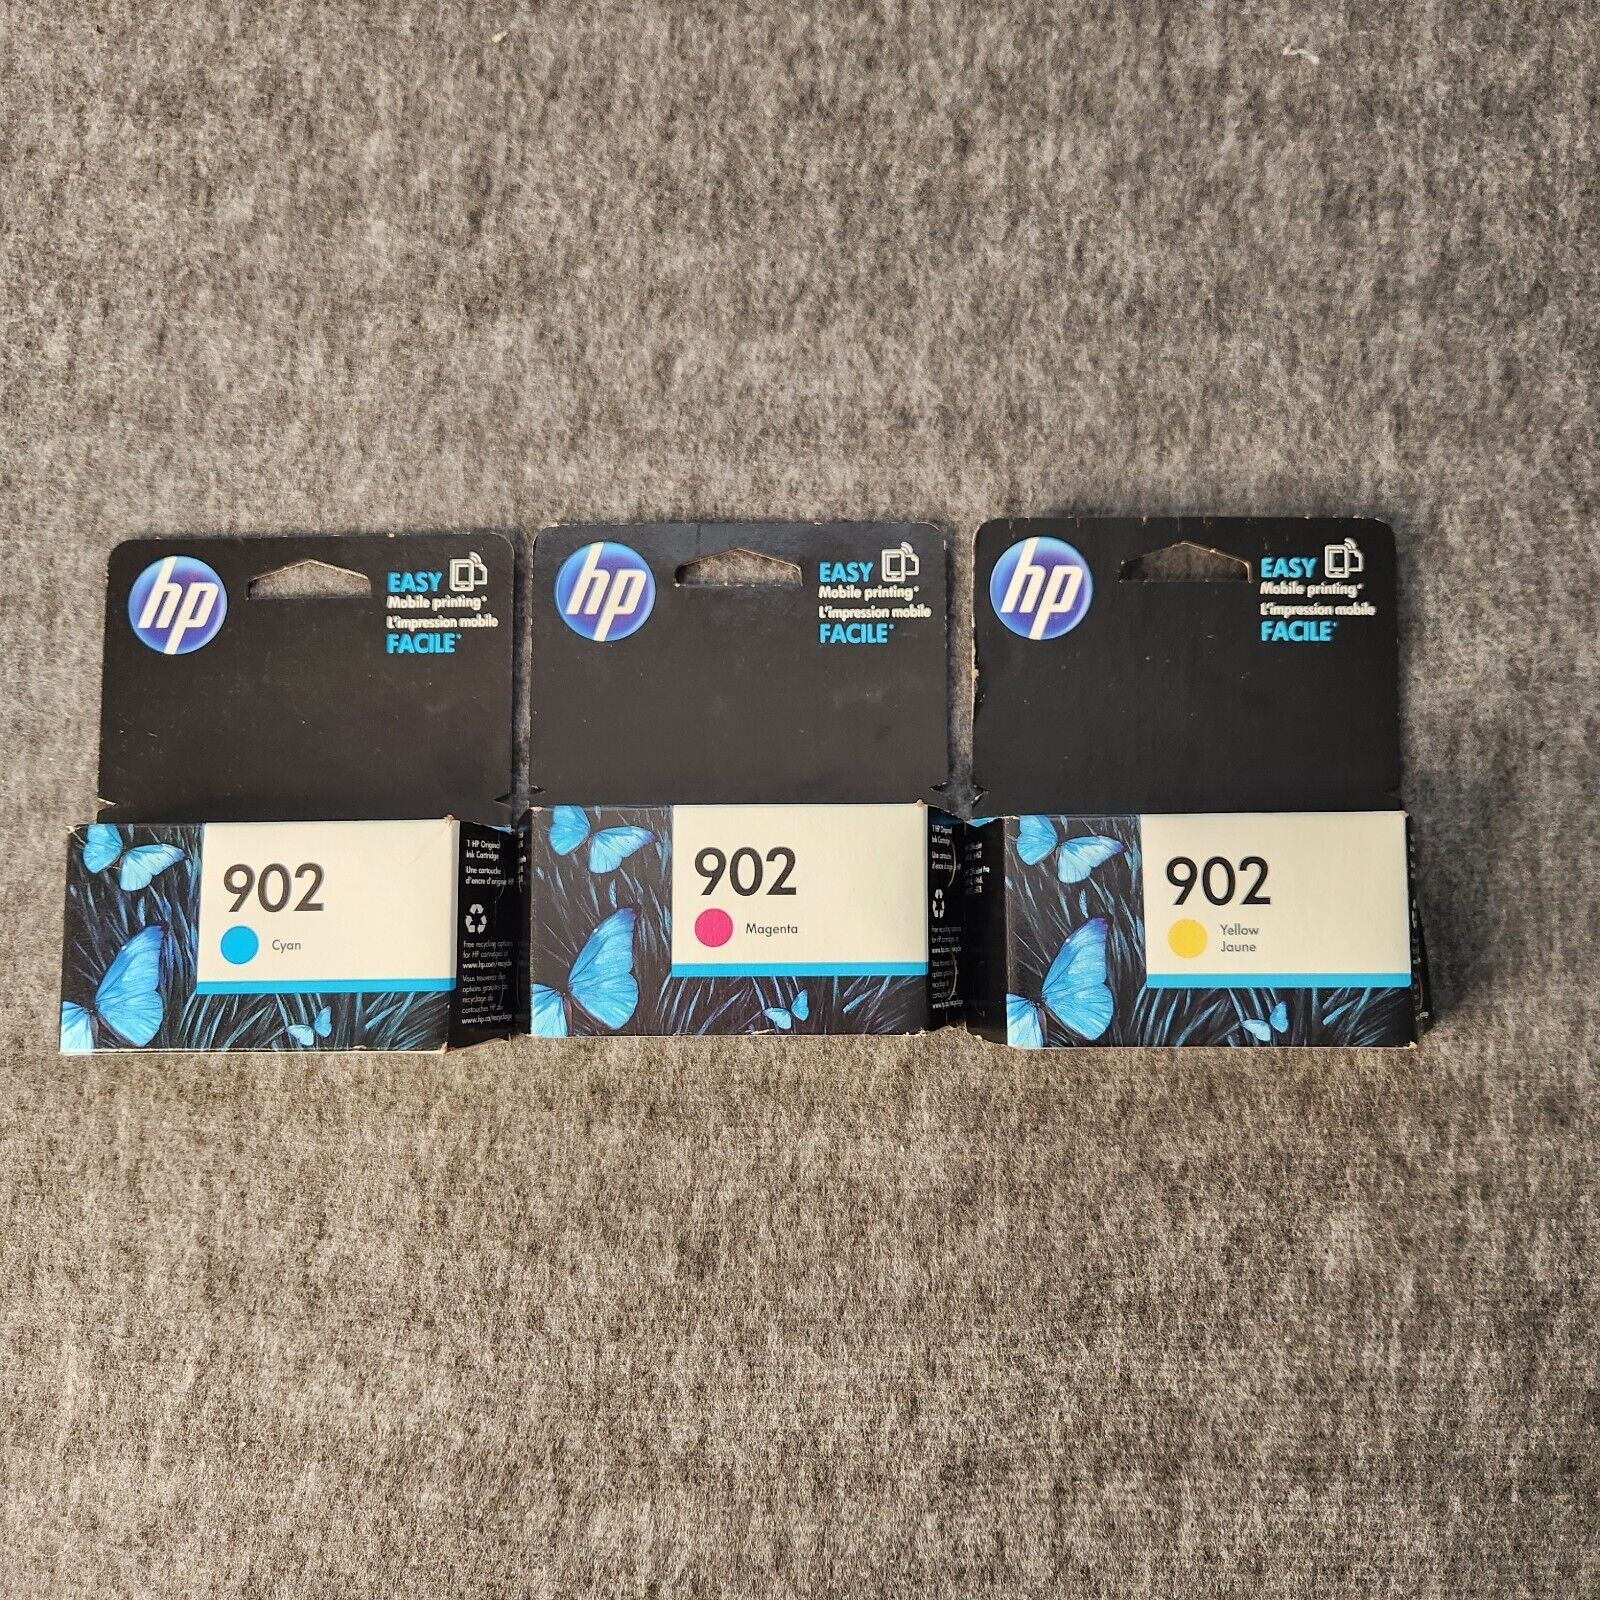 New HP 902 Ink Cartridges Cyan Magenta Yellow Exp Date 11/20, 12/20, 01/21 Lot